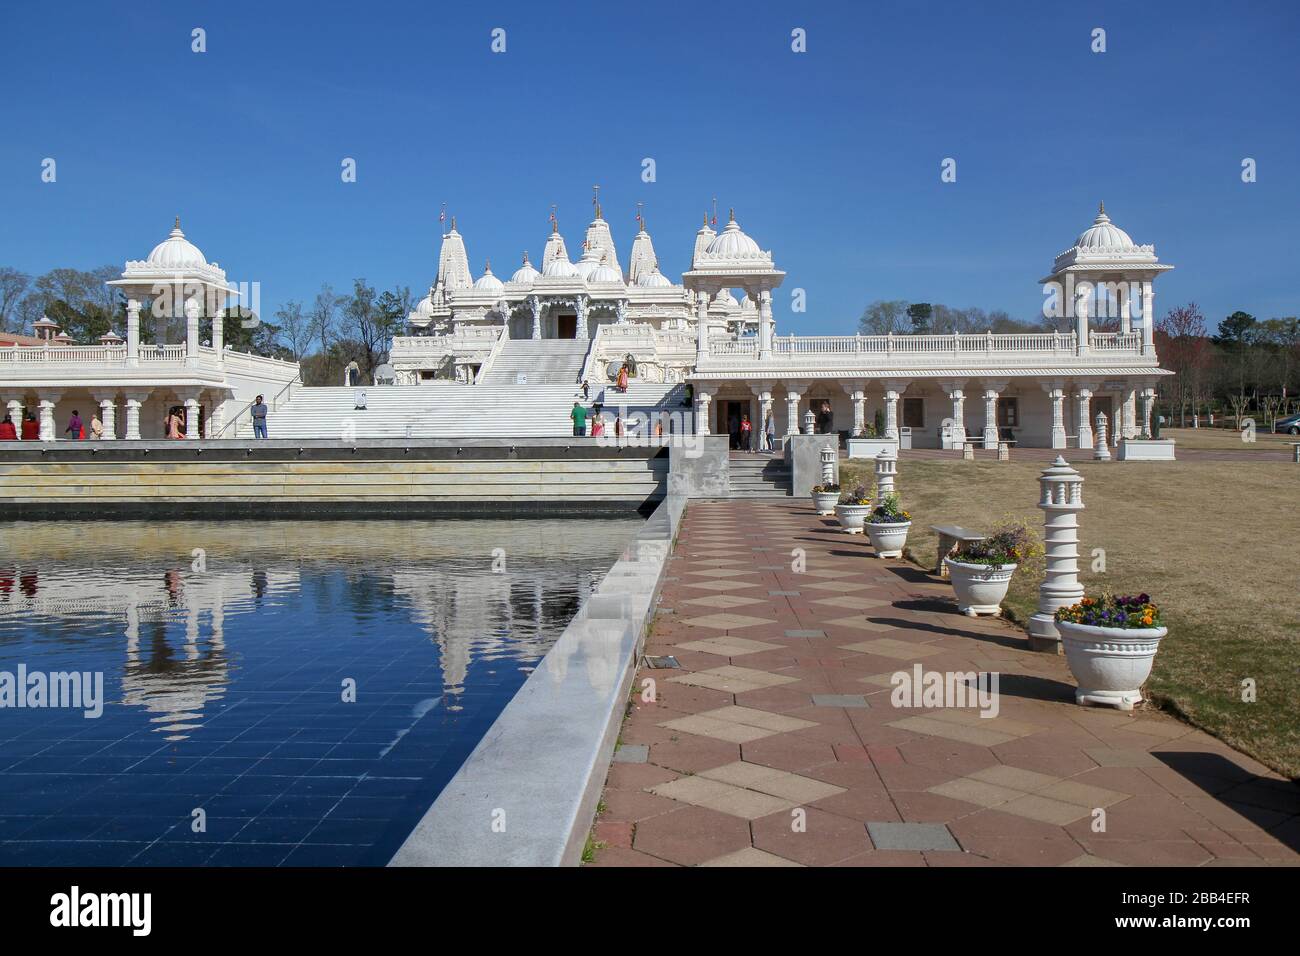 Vista a través de una piscina reflectante de BAPS Shri Swaminarayan Mandir, un templo hindú cerca de Atlanta, en Lilburn, Georgia, Estados Unidos Foto de stock